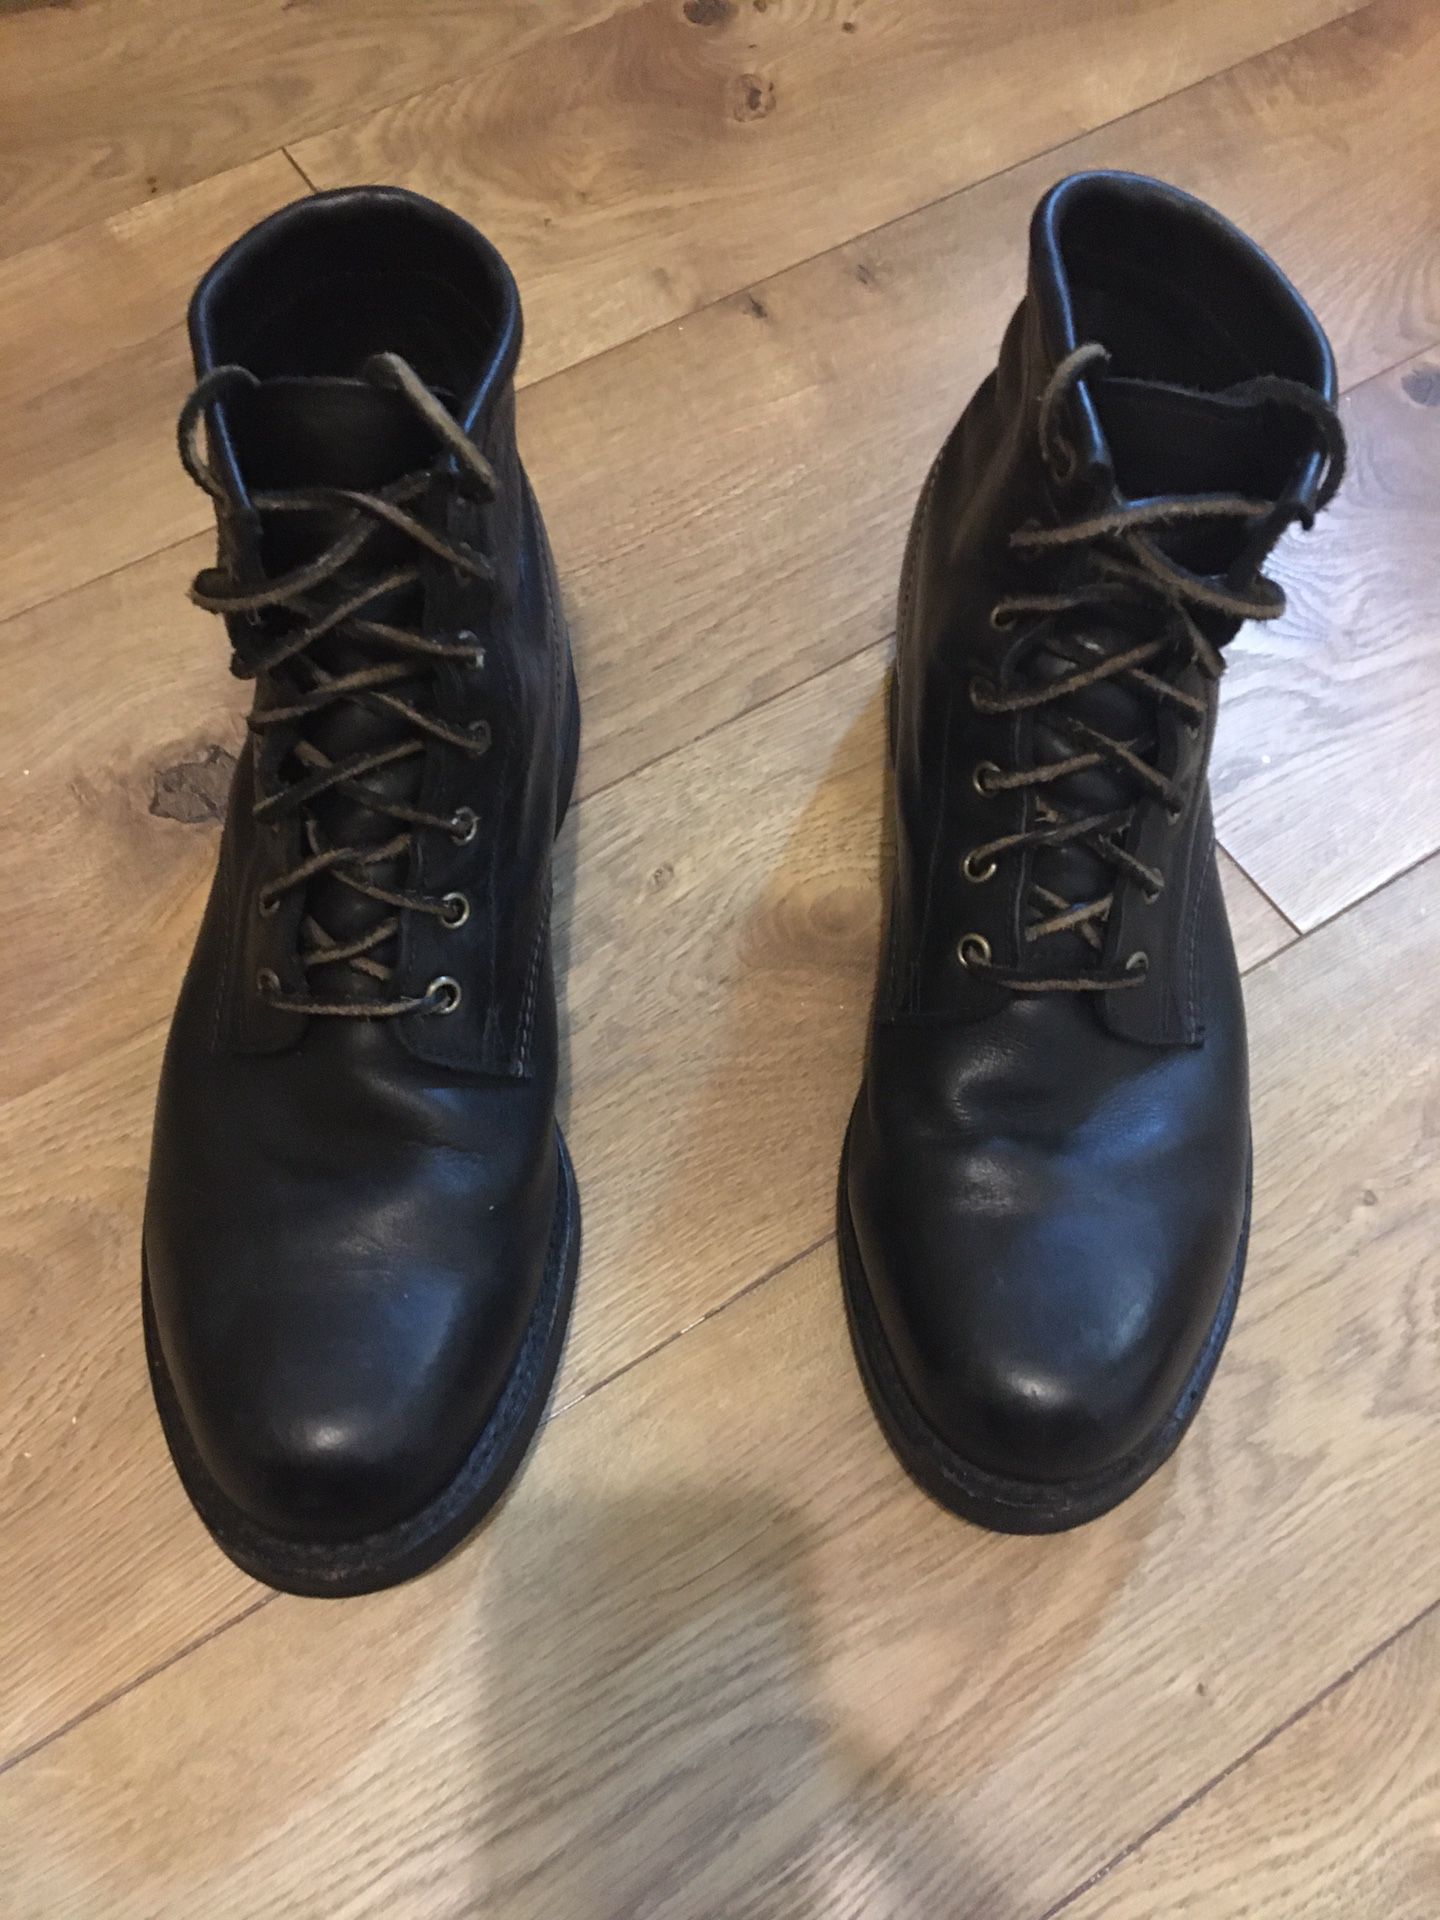 FRYE Mens Black Leather Lace Up Boots 9.5D